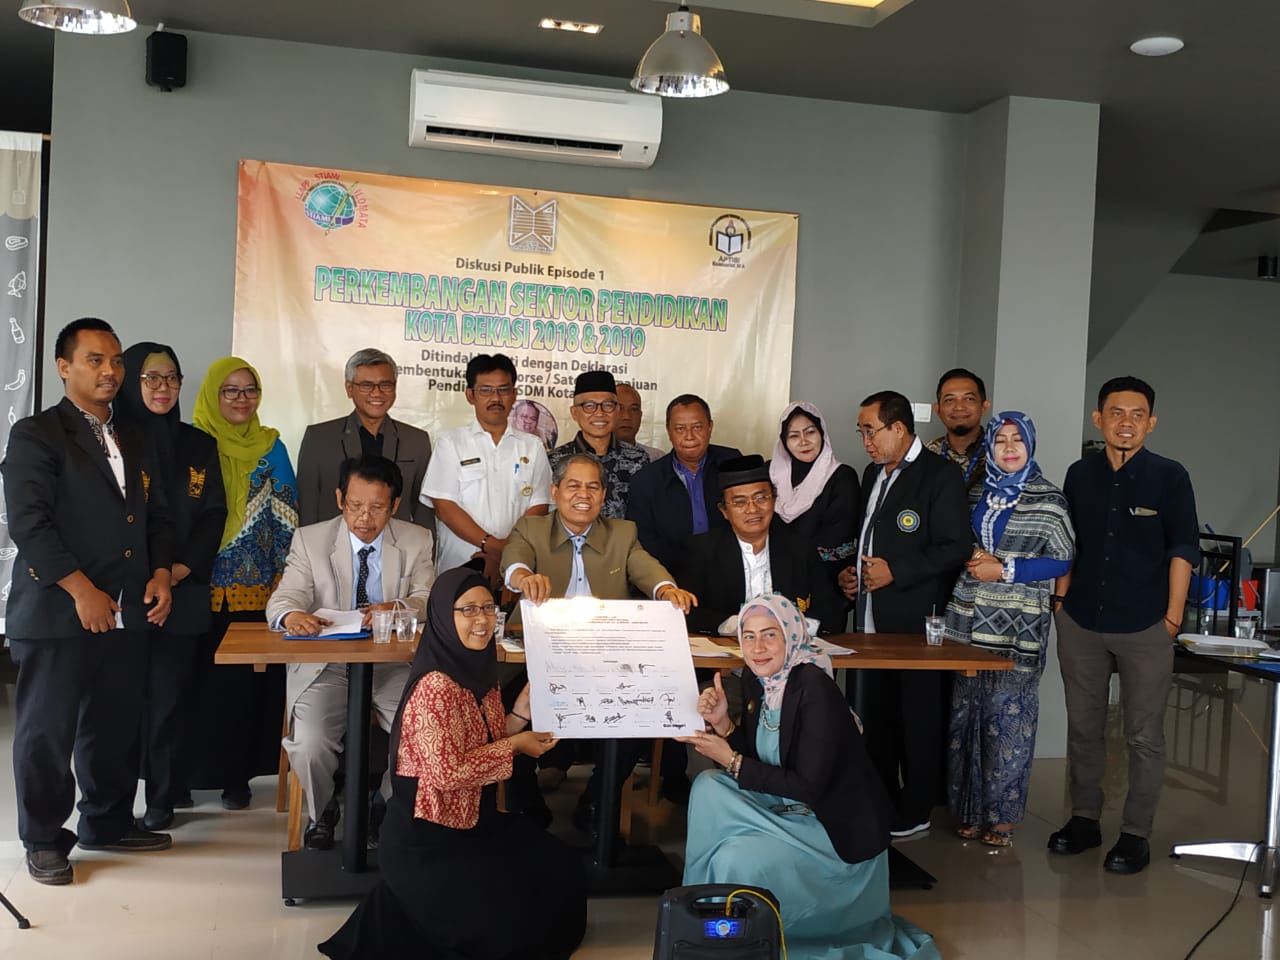 Diskusi Publik Perkembangan Sektor Pendidikan Kota Bekasi